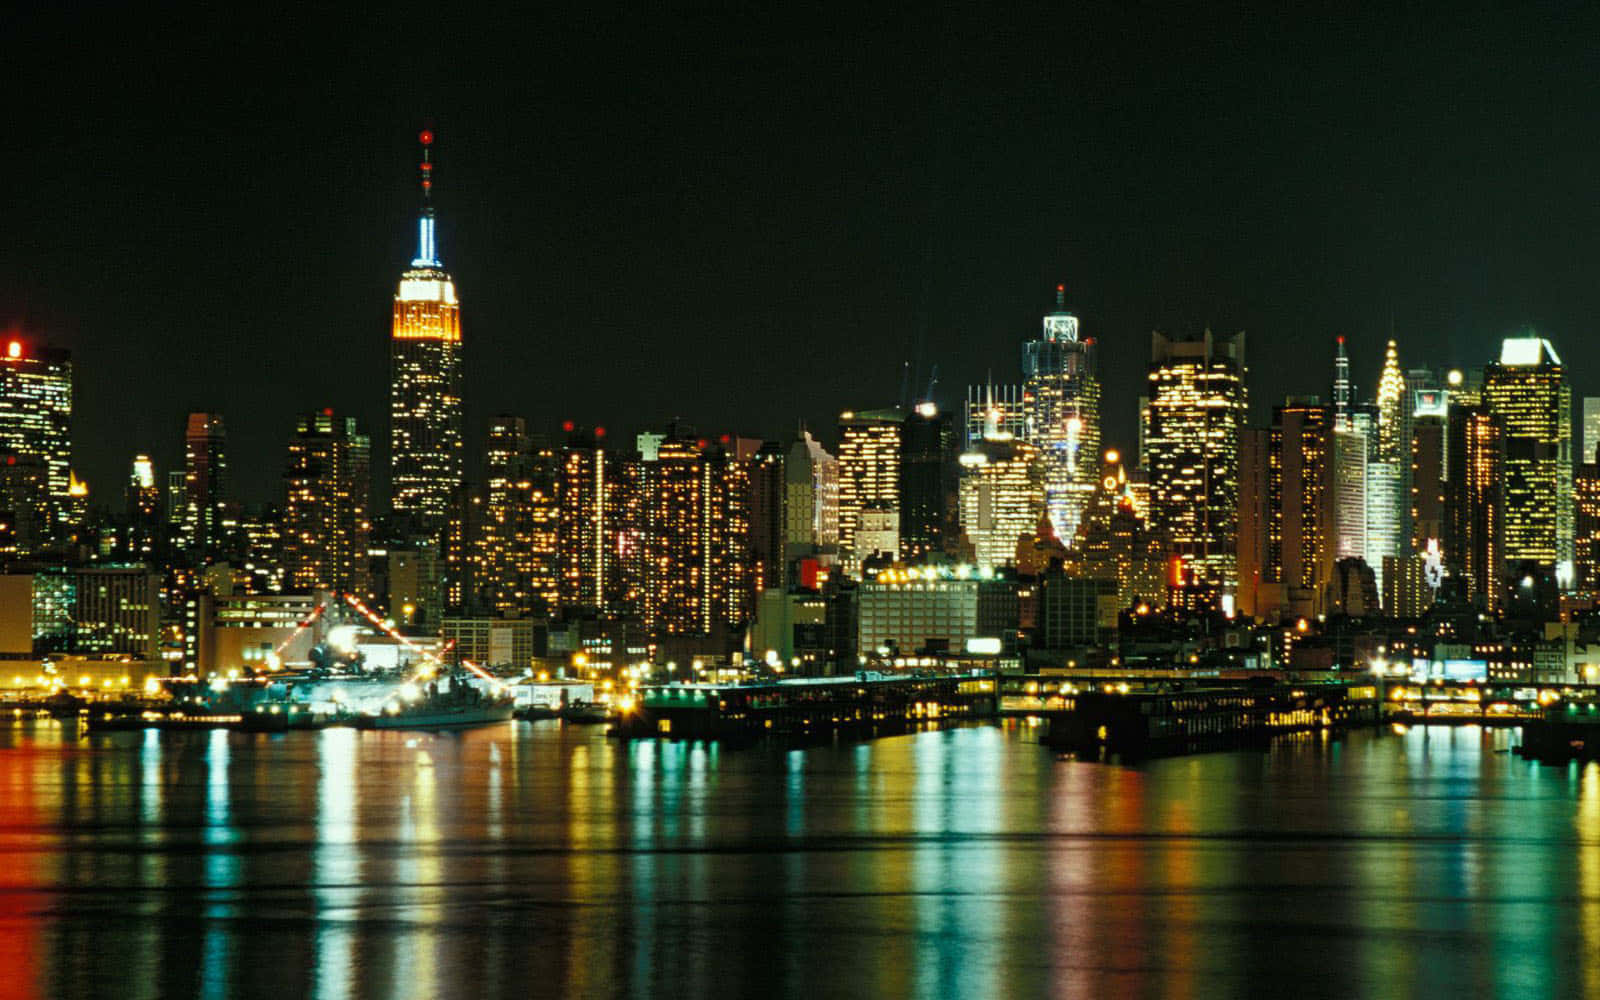 The Bright Lights of New York City